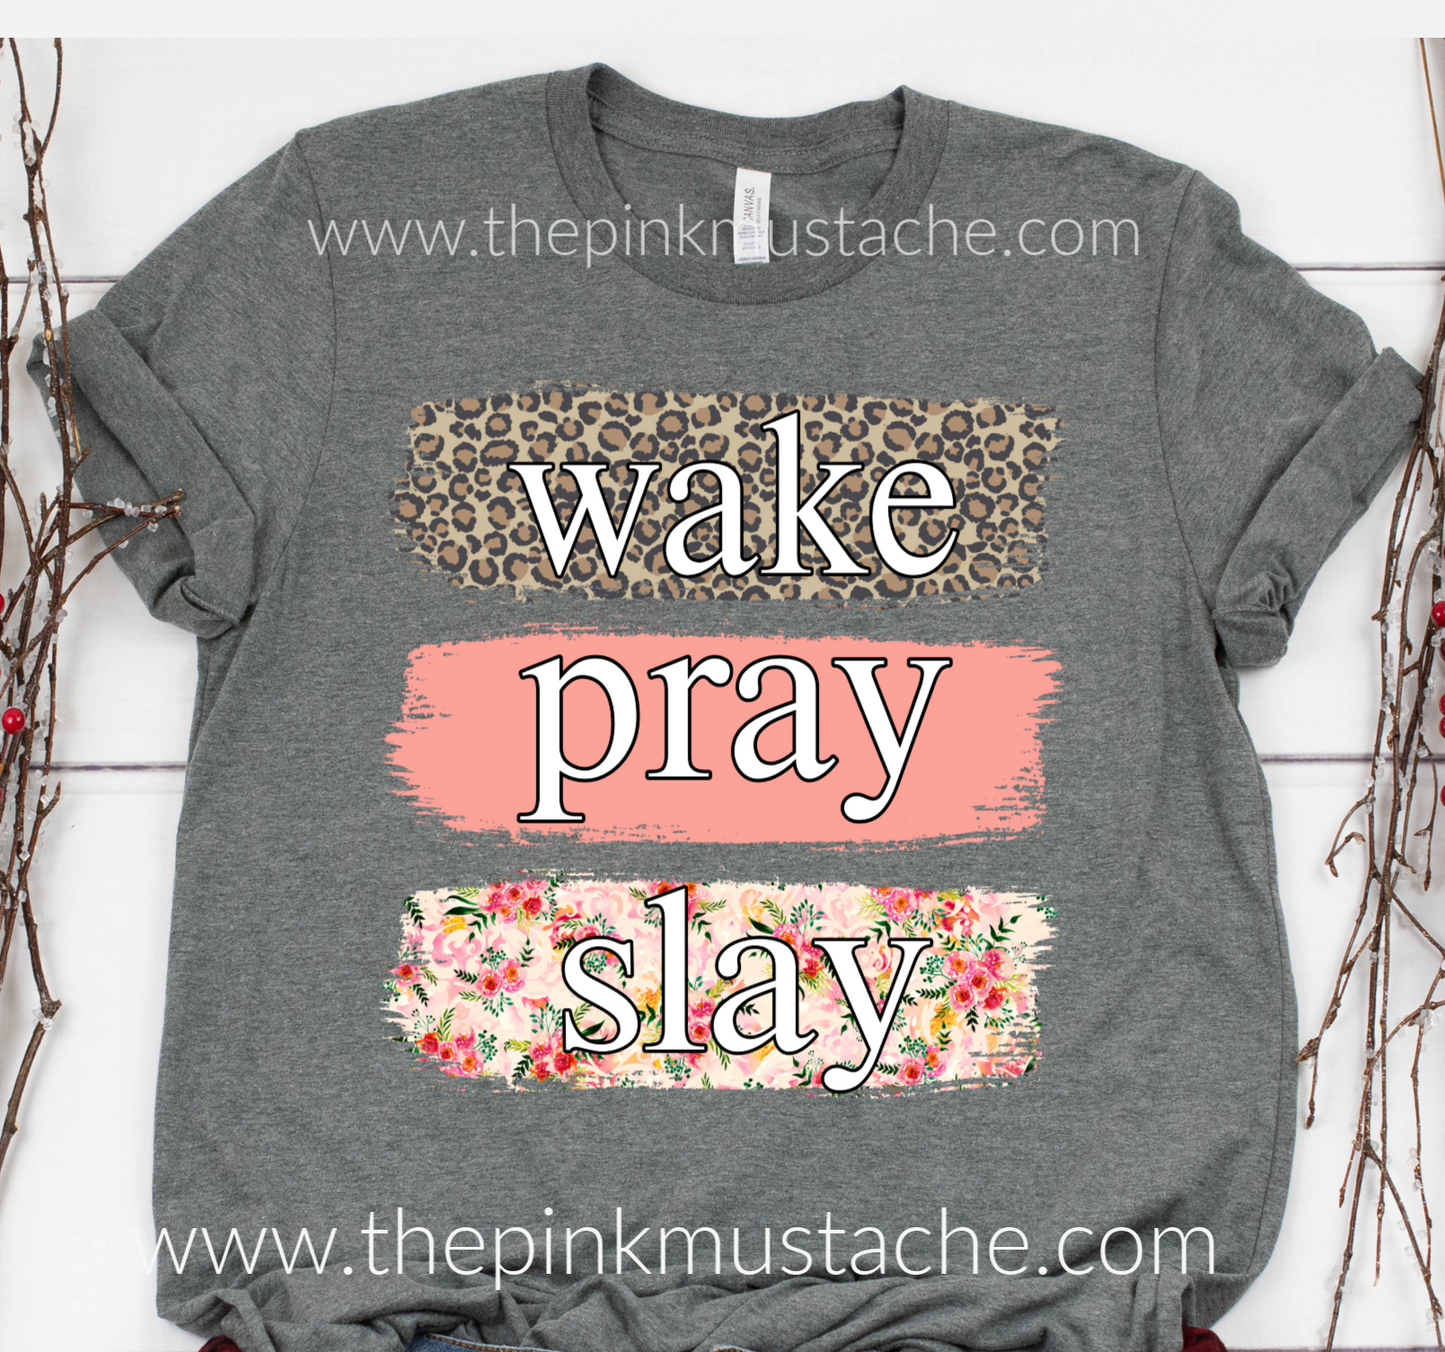 Wake Pray Slay Tee / Bella Canvas Wake Pray Slay  Floral  Soft Shirt / Mommy and Me